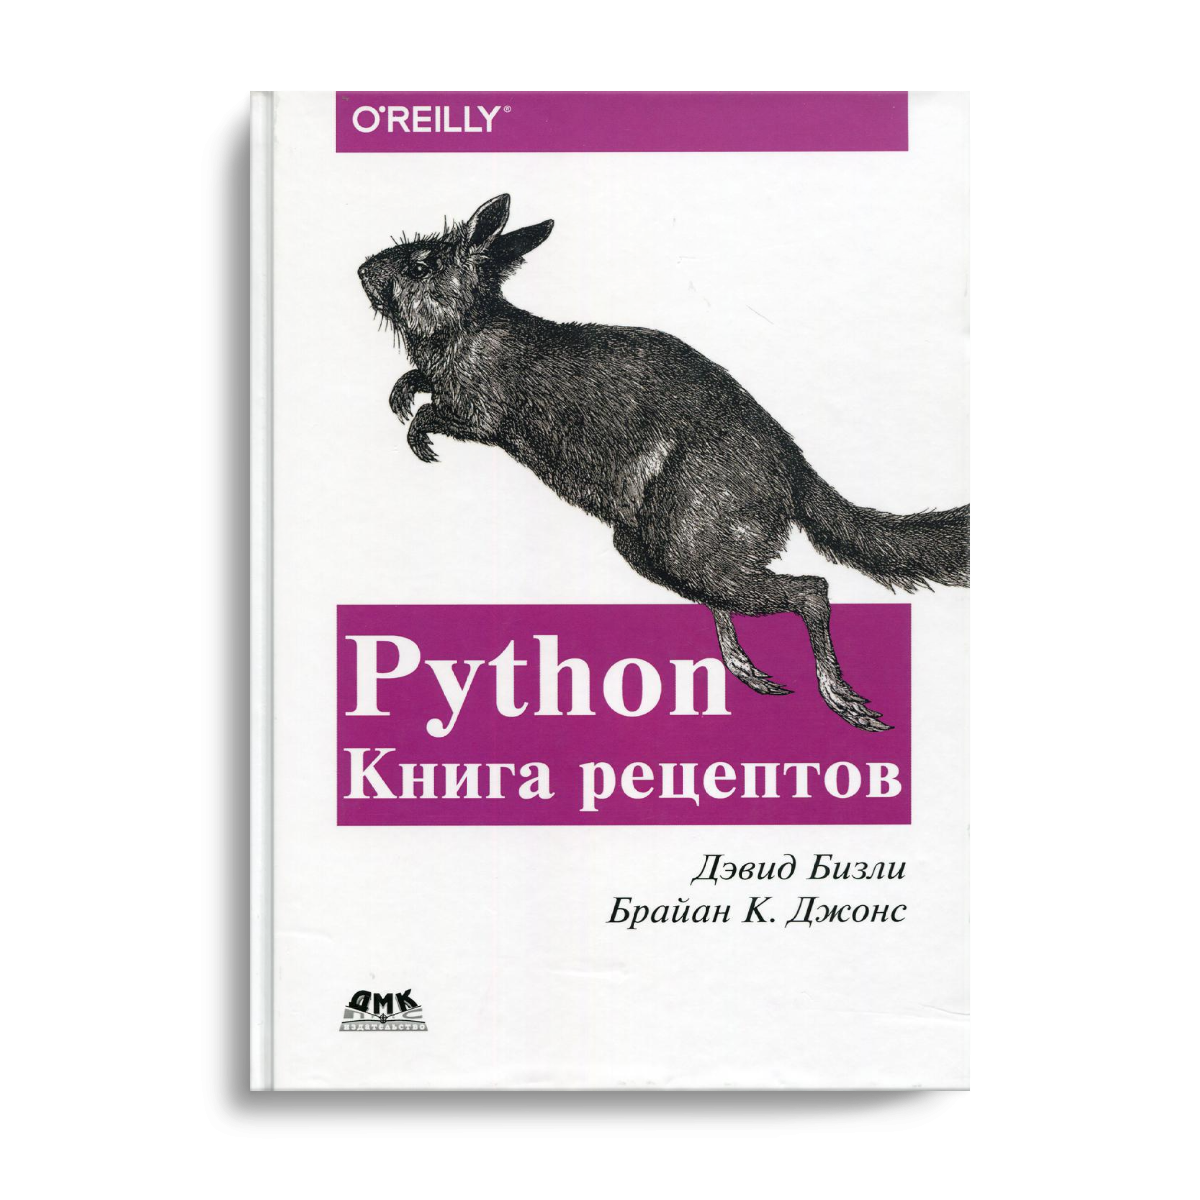 Язык python книги. Брайан к. Джонс Дэвид Бизли. Python. Книга рецептов. Python книга. Дэвид Бизли Python. Python книга рецептов.